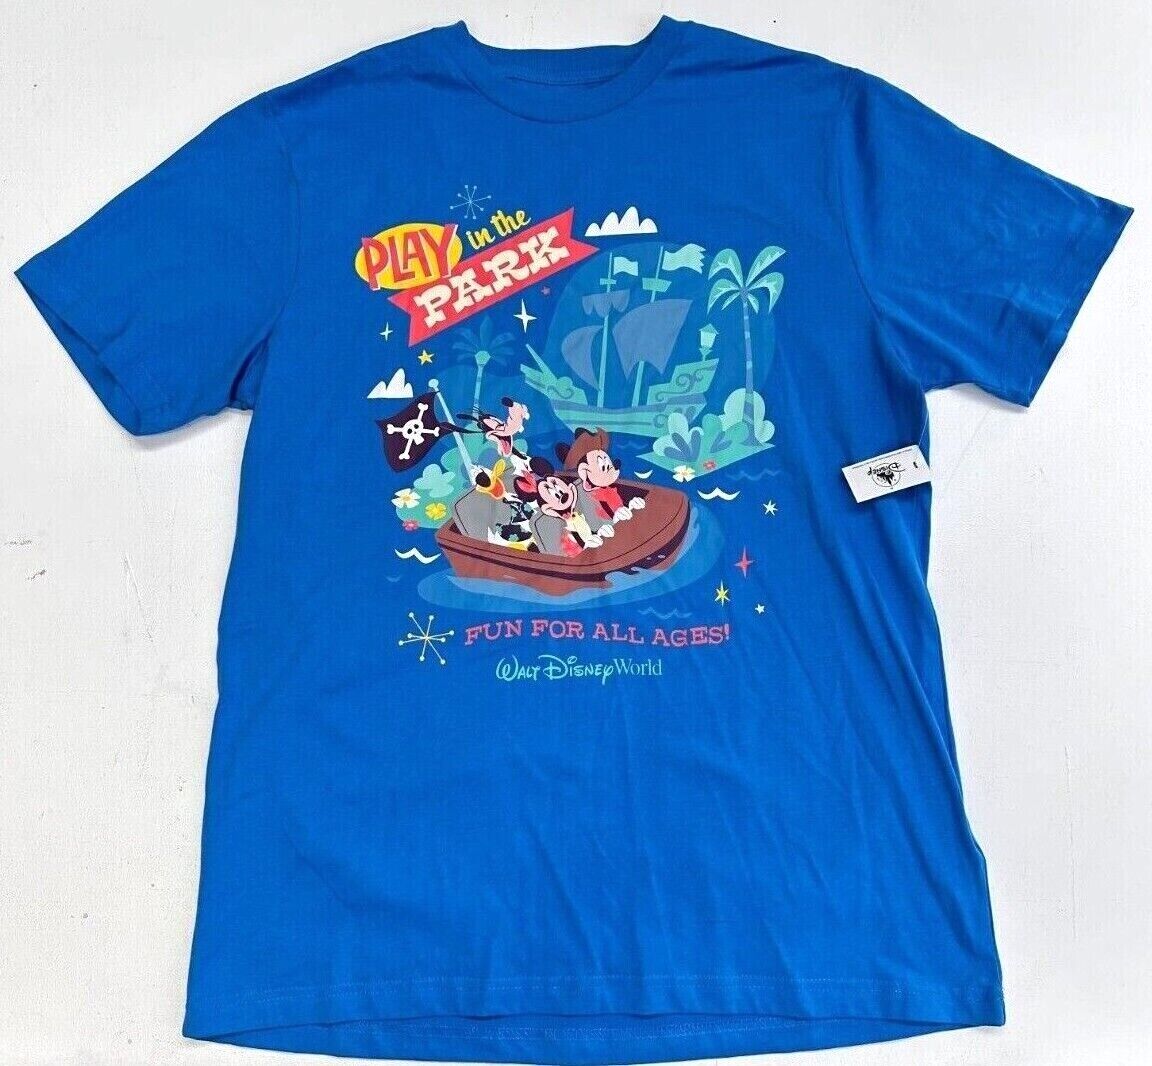 Walt Disney World Play In the Park Mickey Pirates Caribbean Blue Shirt Adult